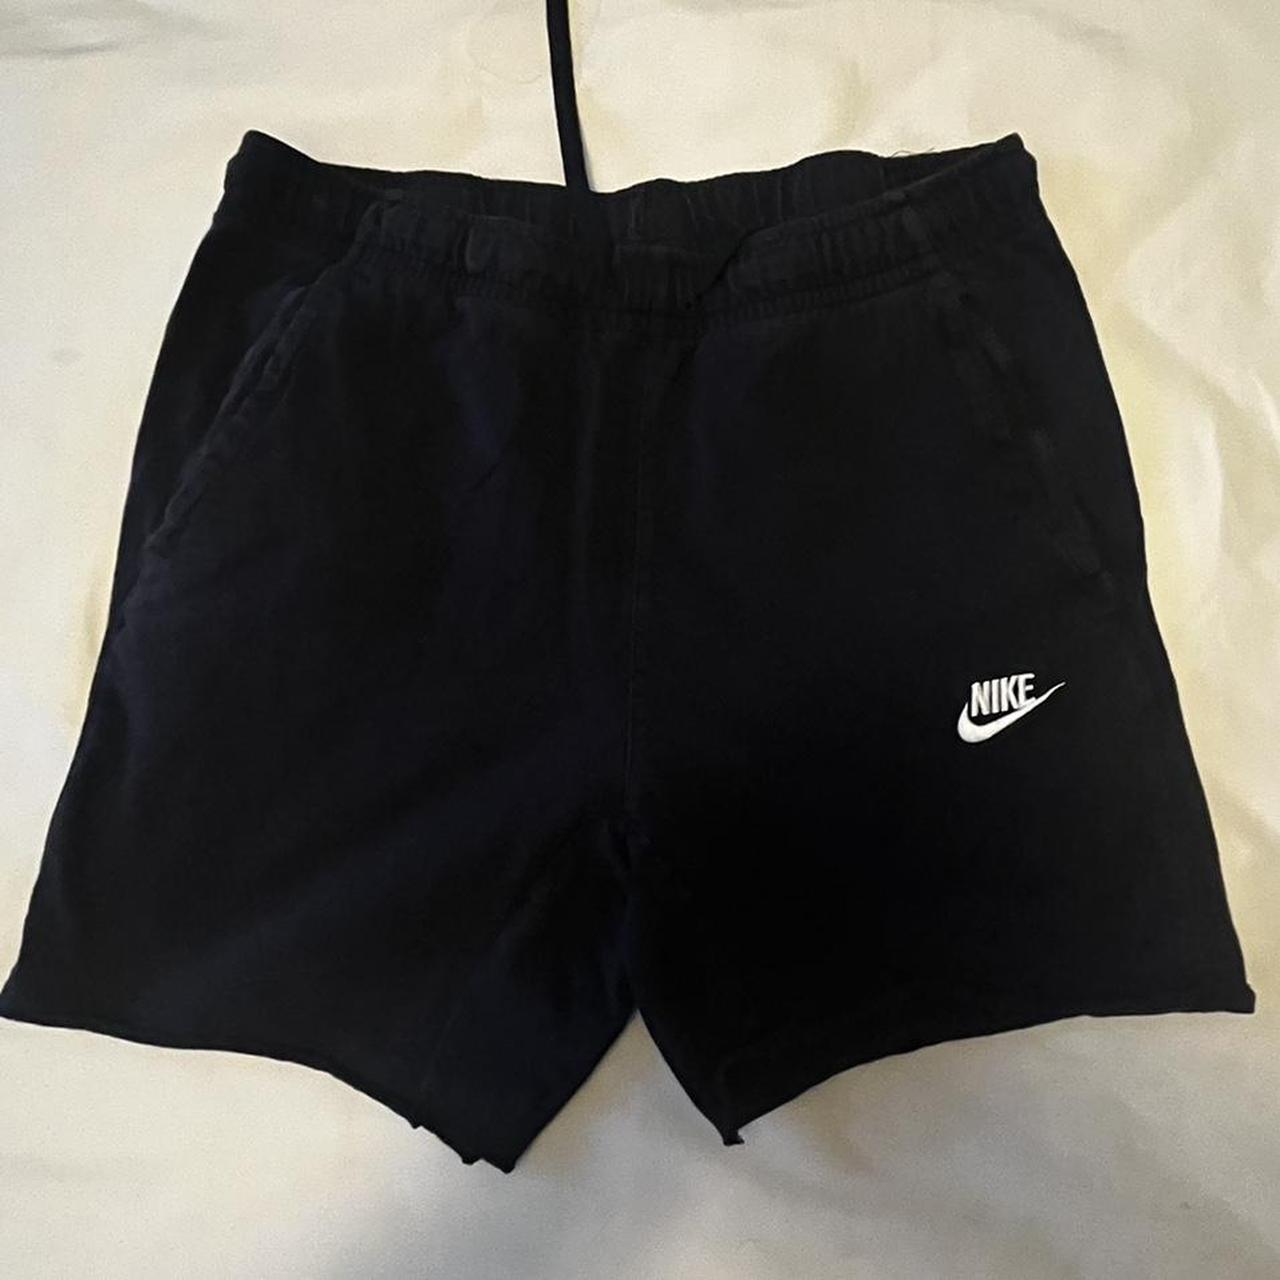 Mens Navy Nike shorts - Depop